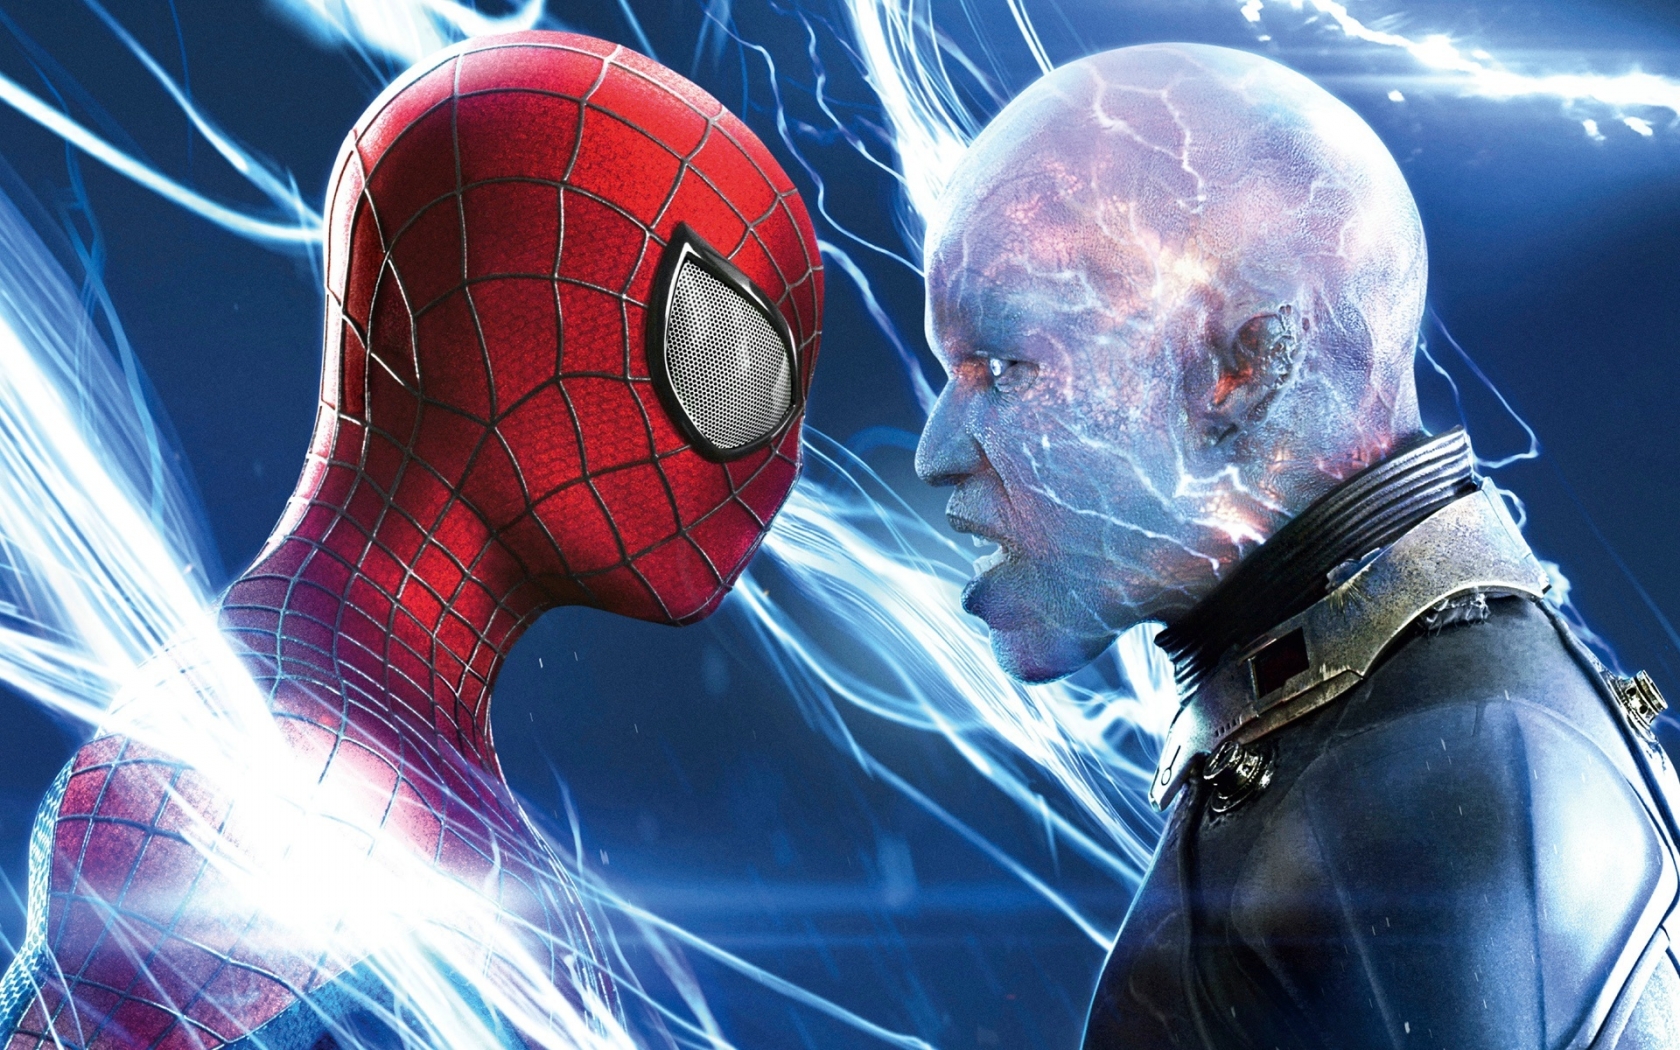 Spiderman vs Electro for 1680 x 1050 widescreen resolution